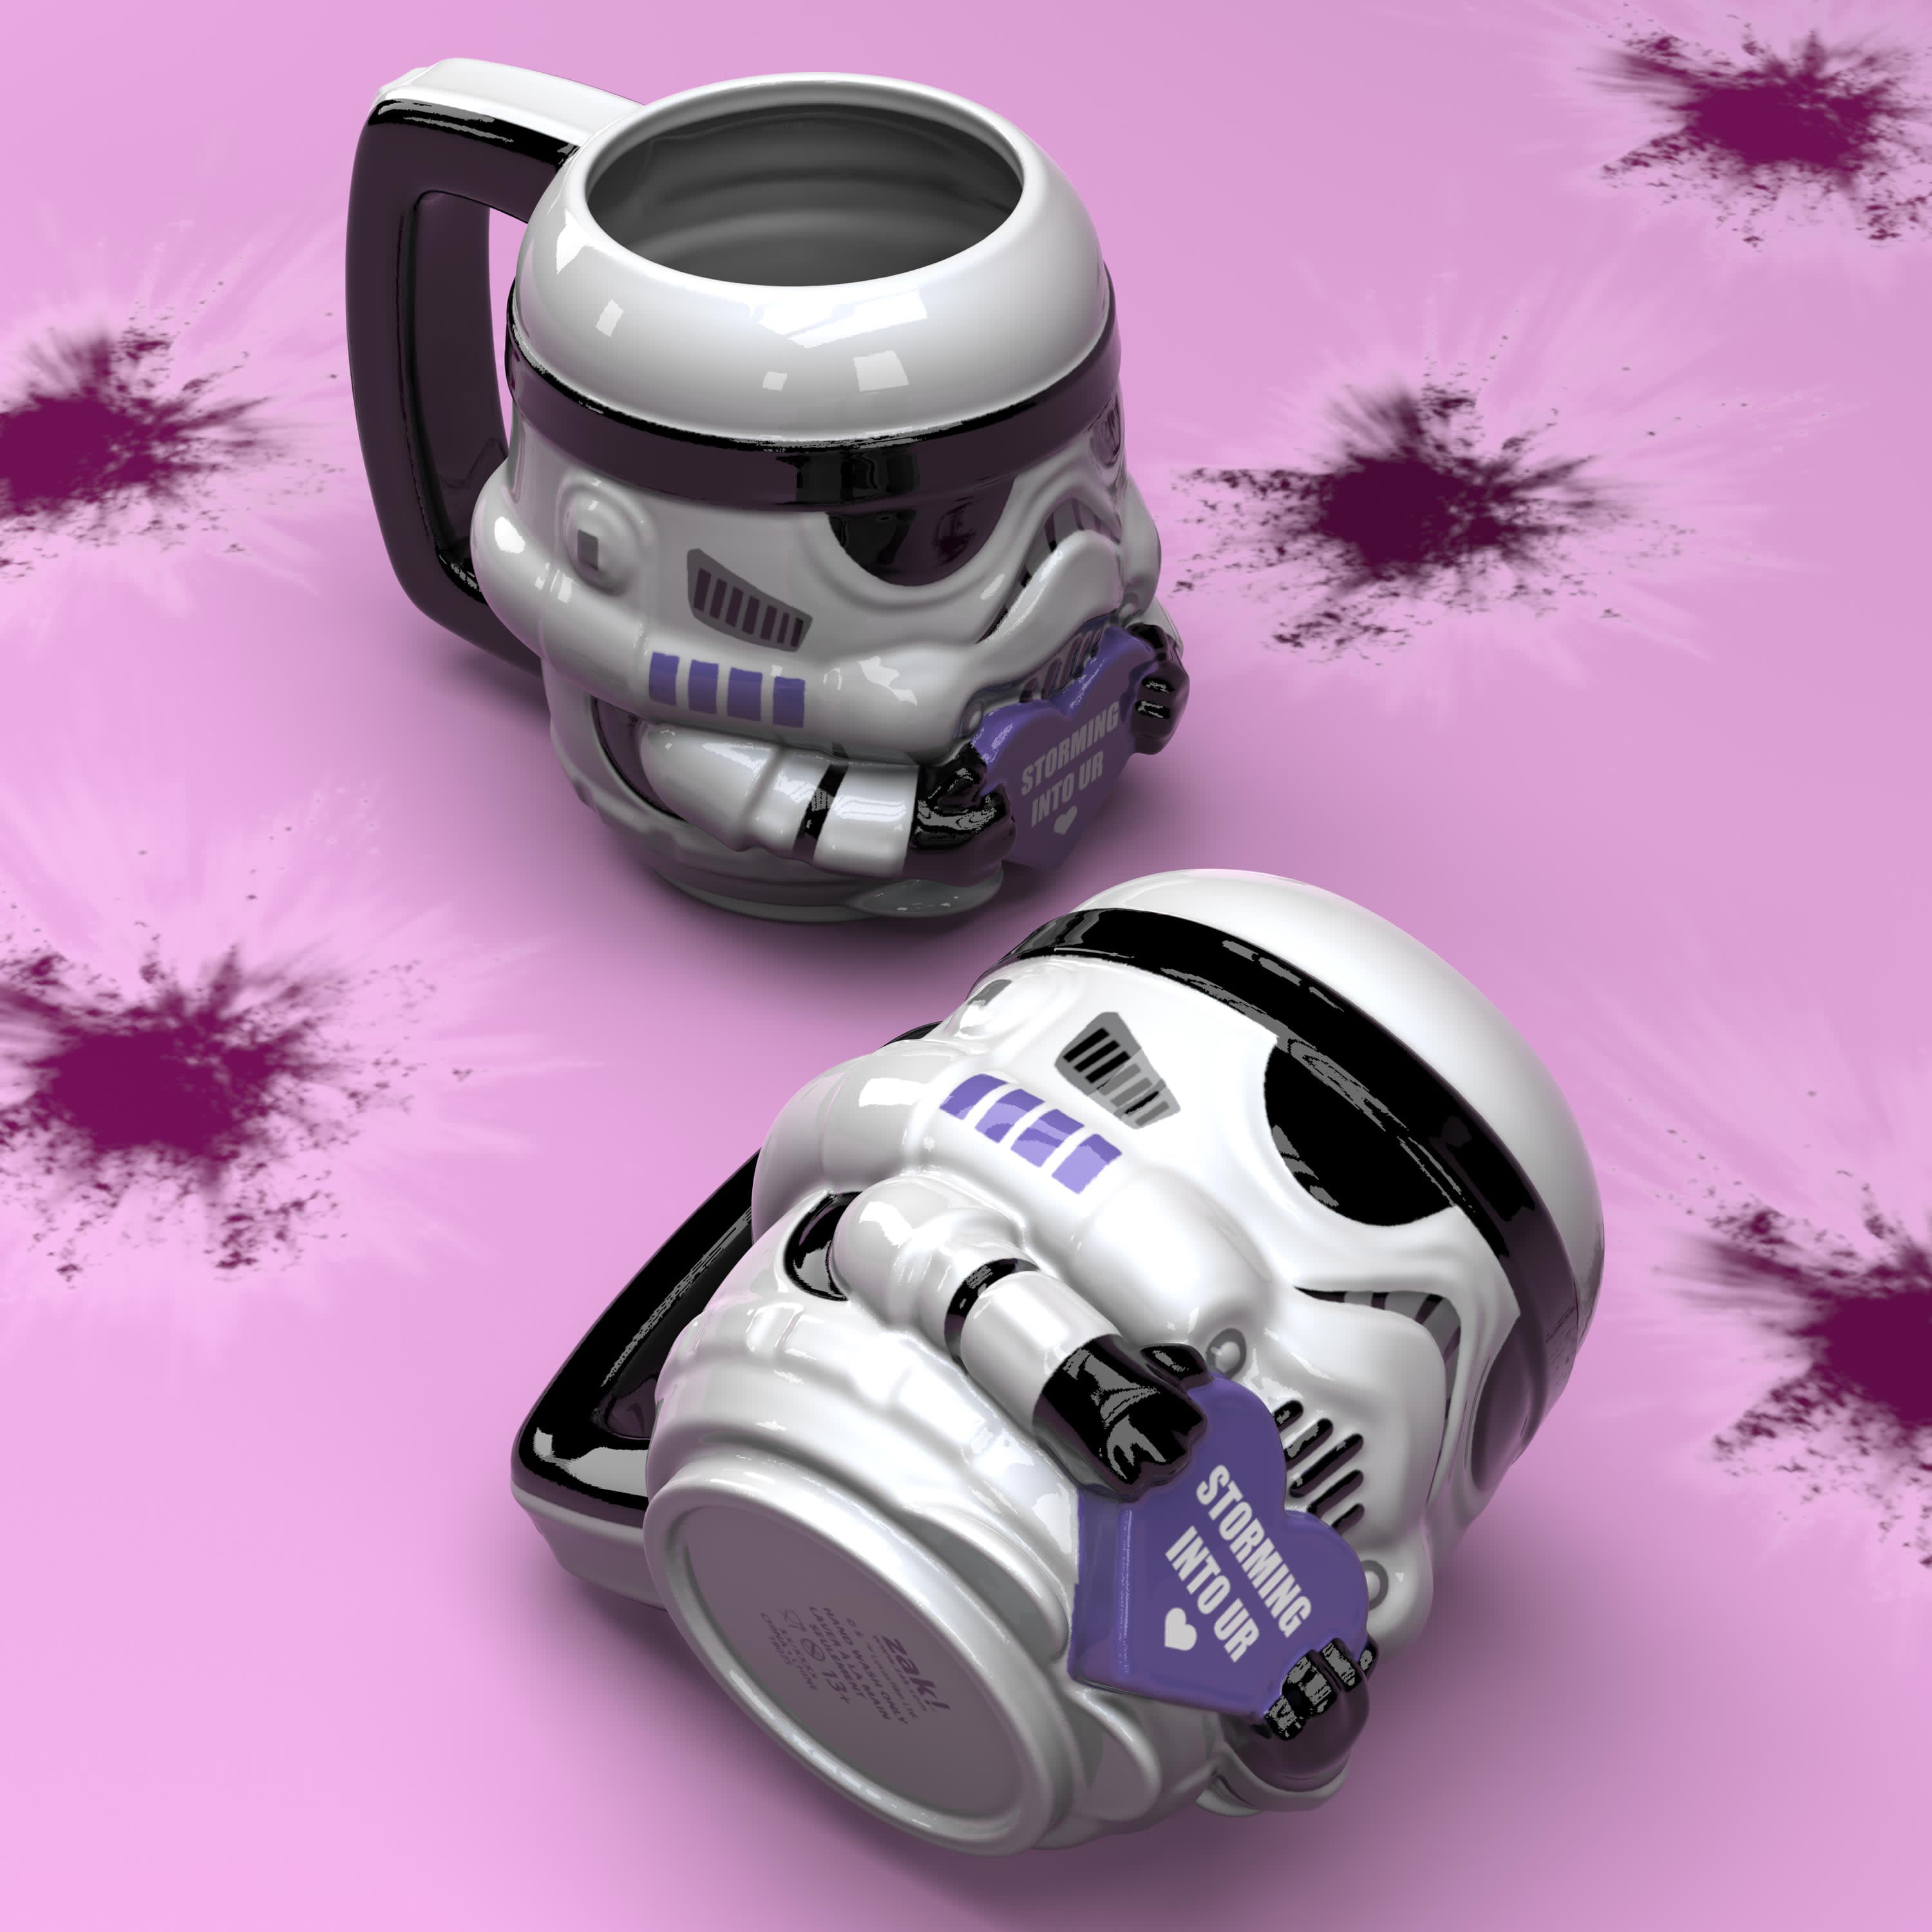  Star Wars Storm Trooper Sculpted Ceramic Mug, 18Fl oz